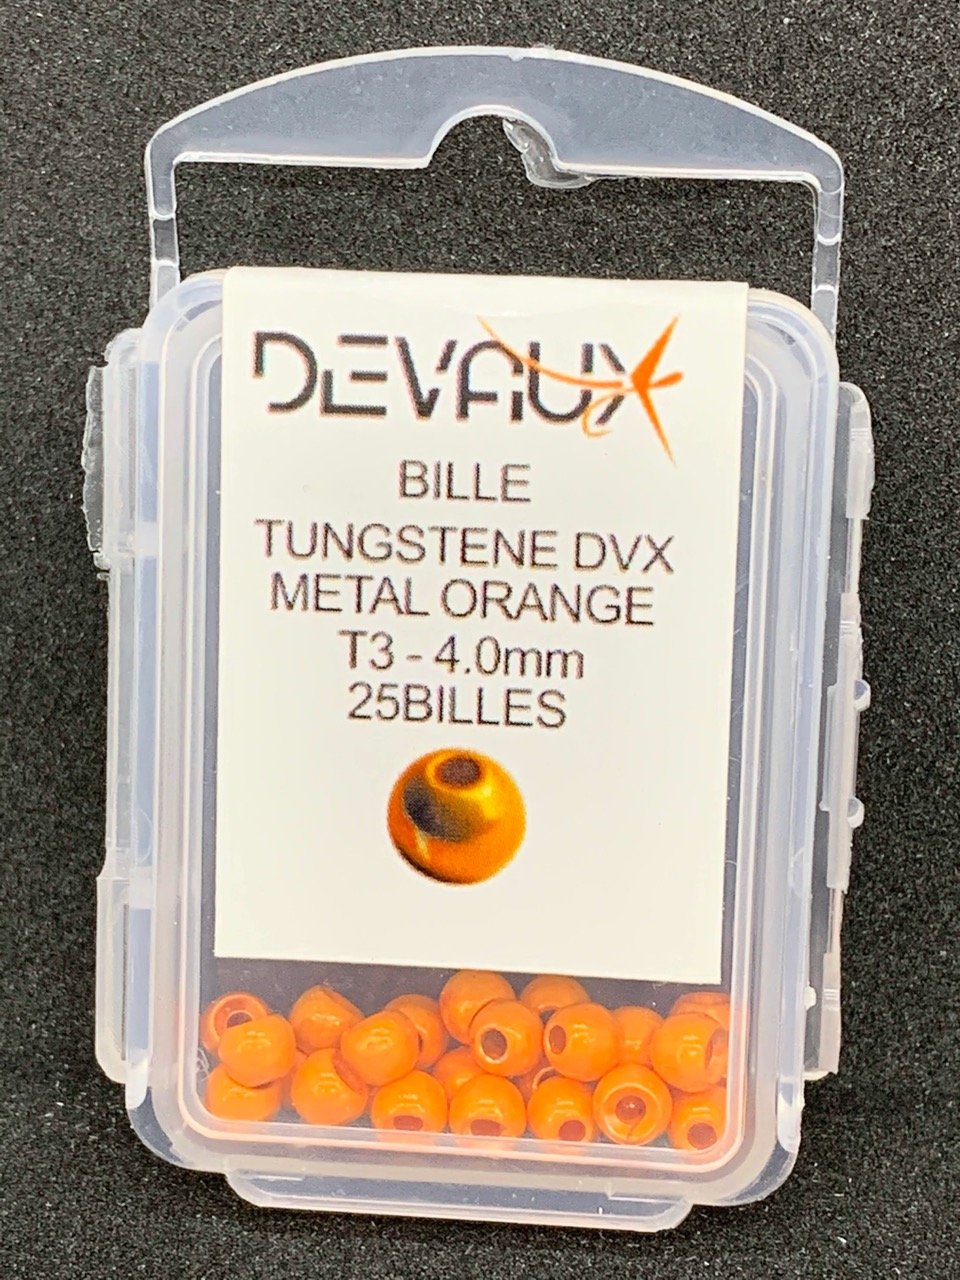 Billes tungstène DVX métal orange